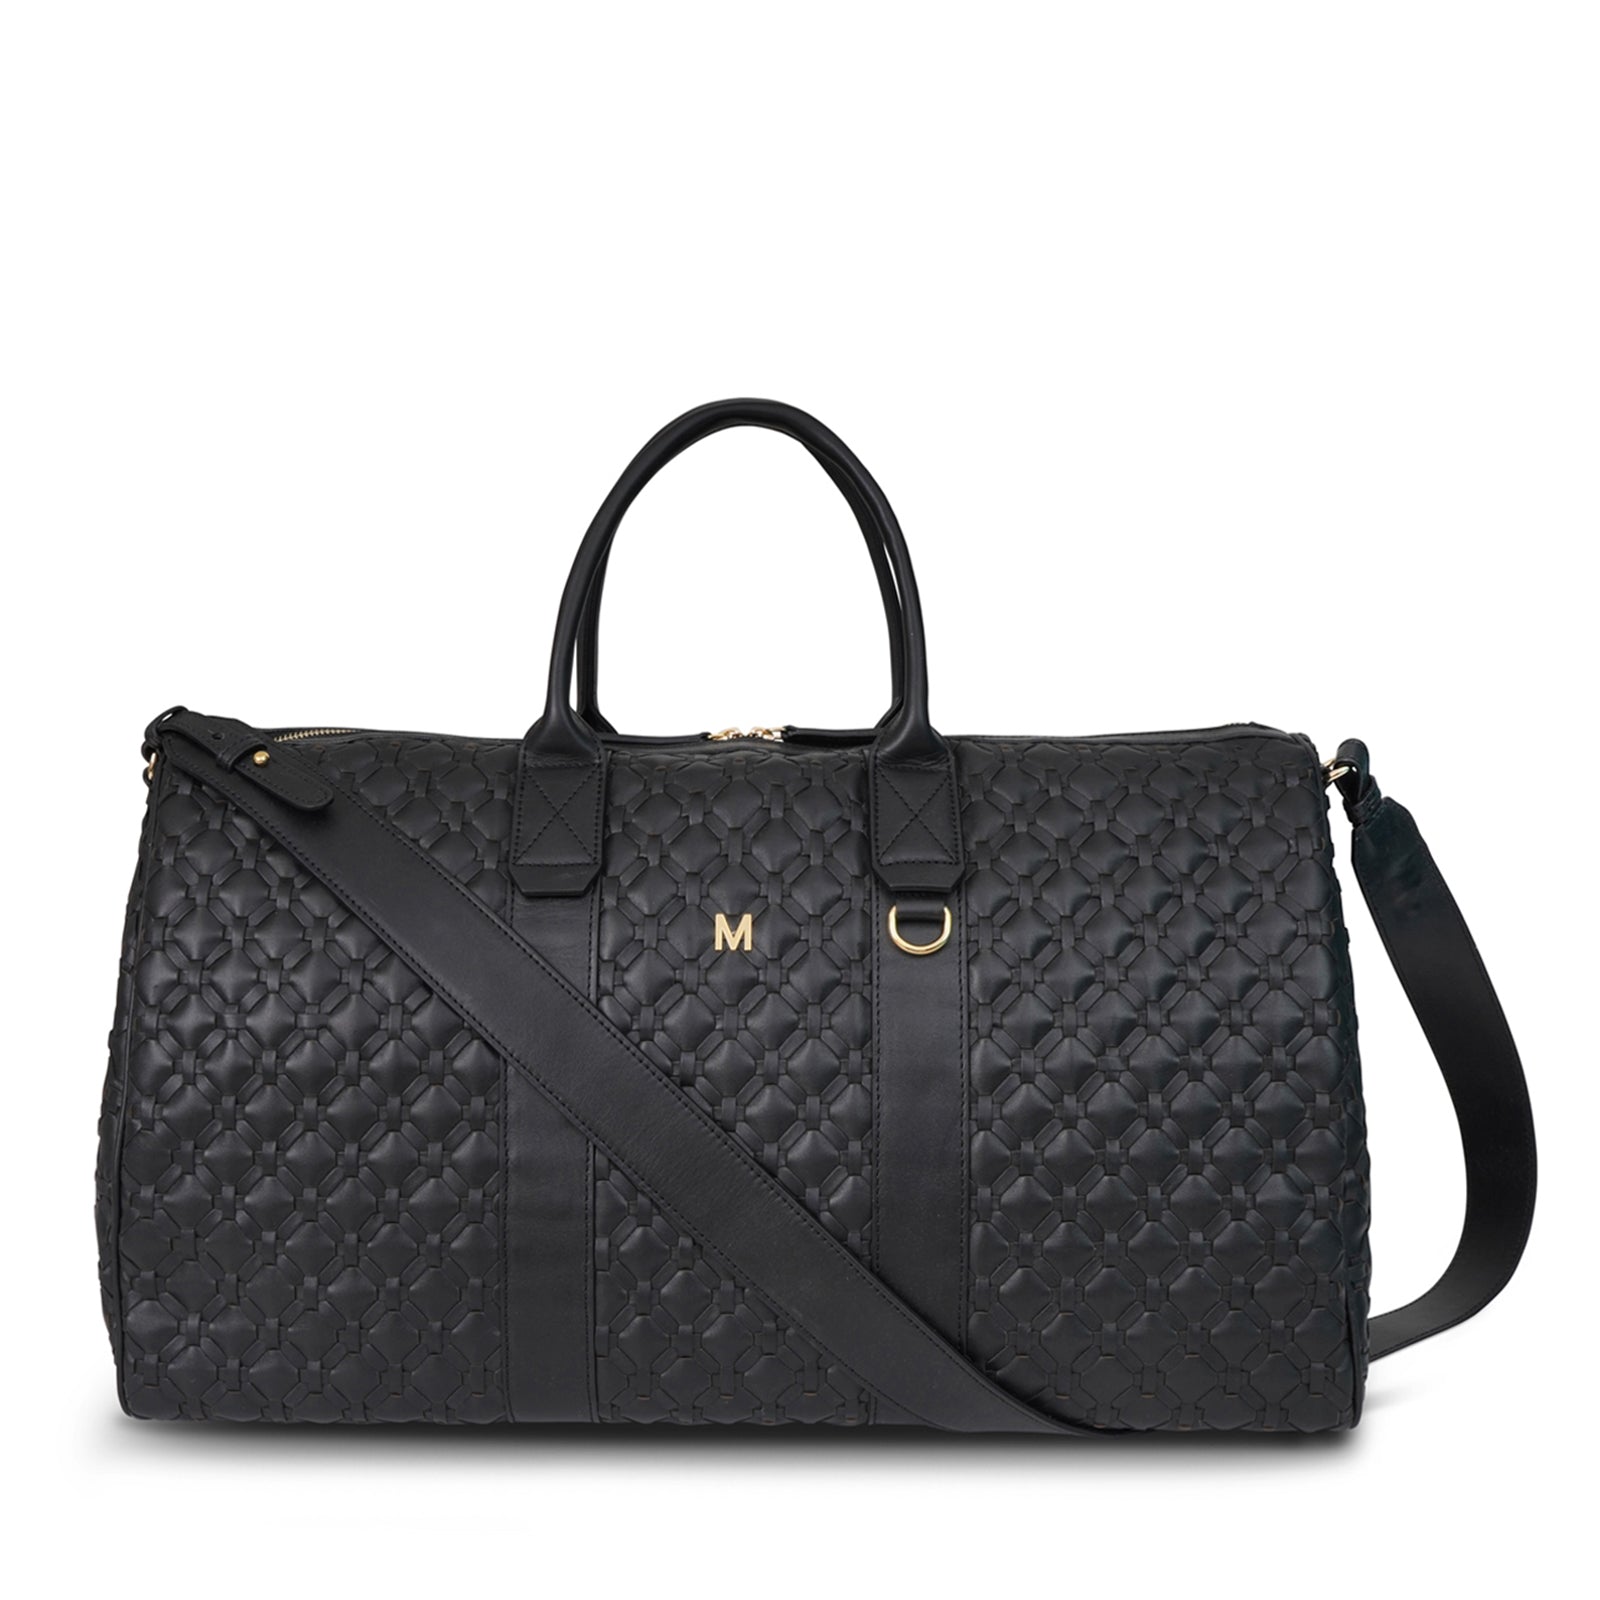 The Travel Elena, Italian Woven Leather Handbag - MILANER